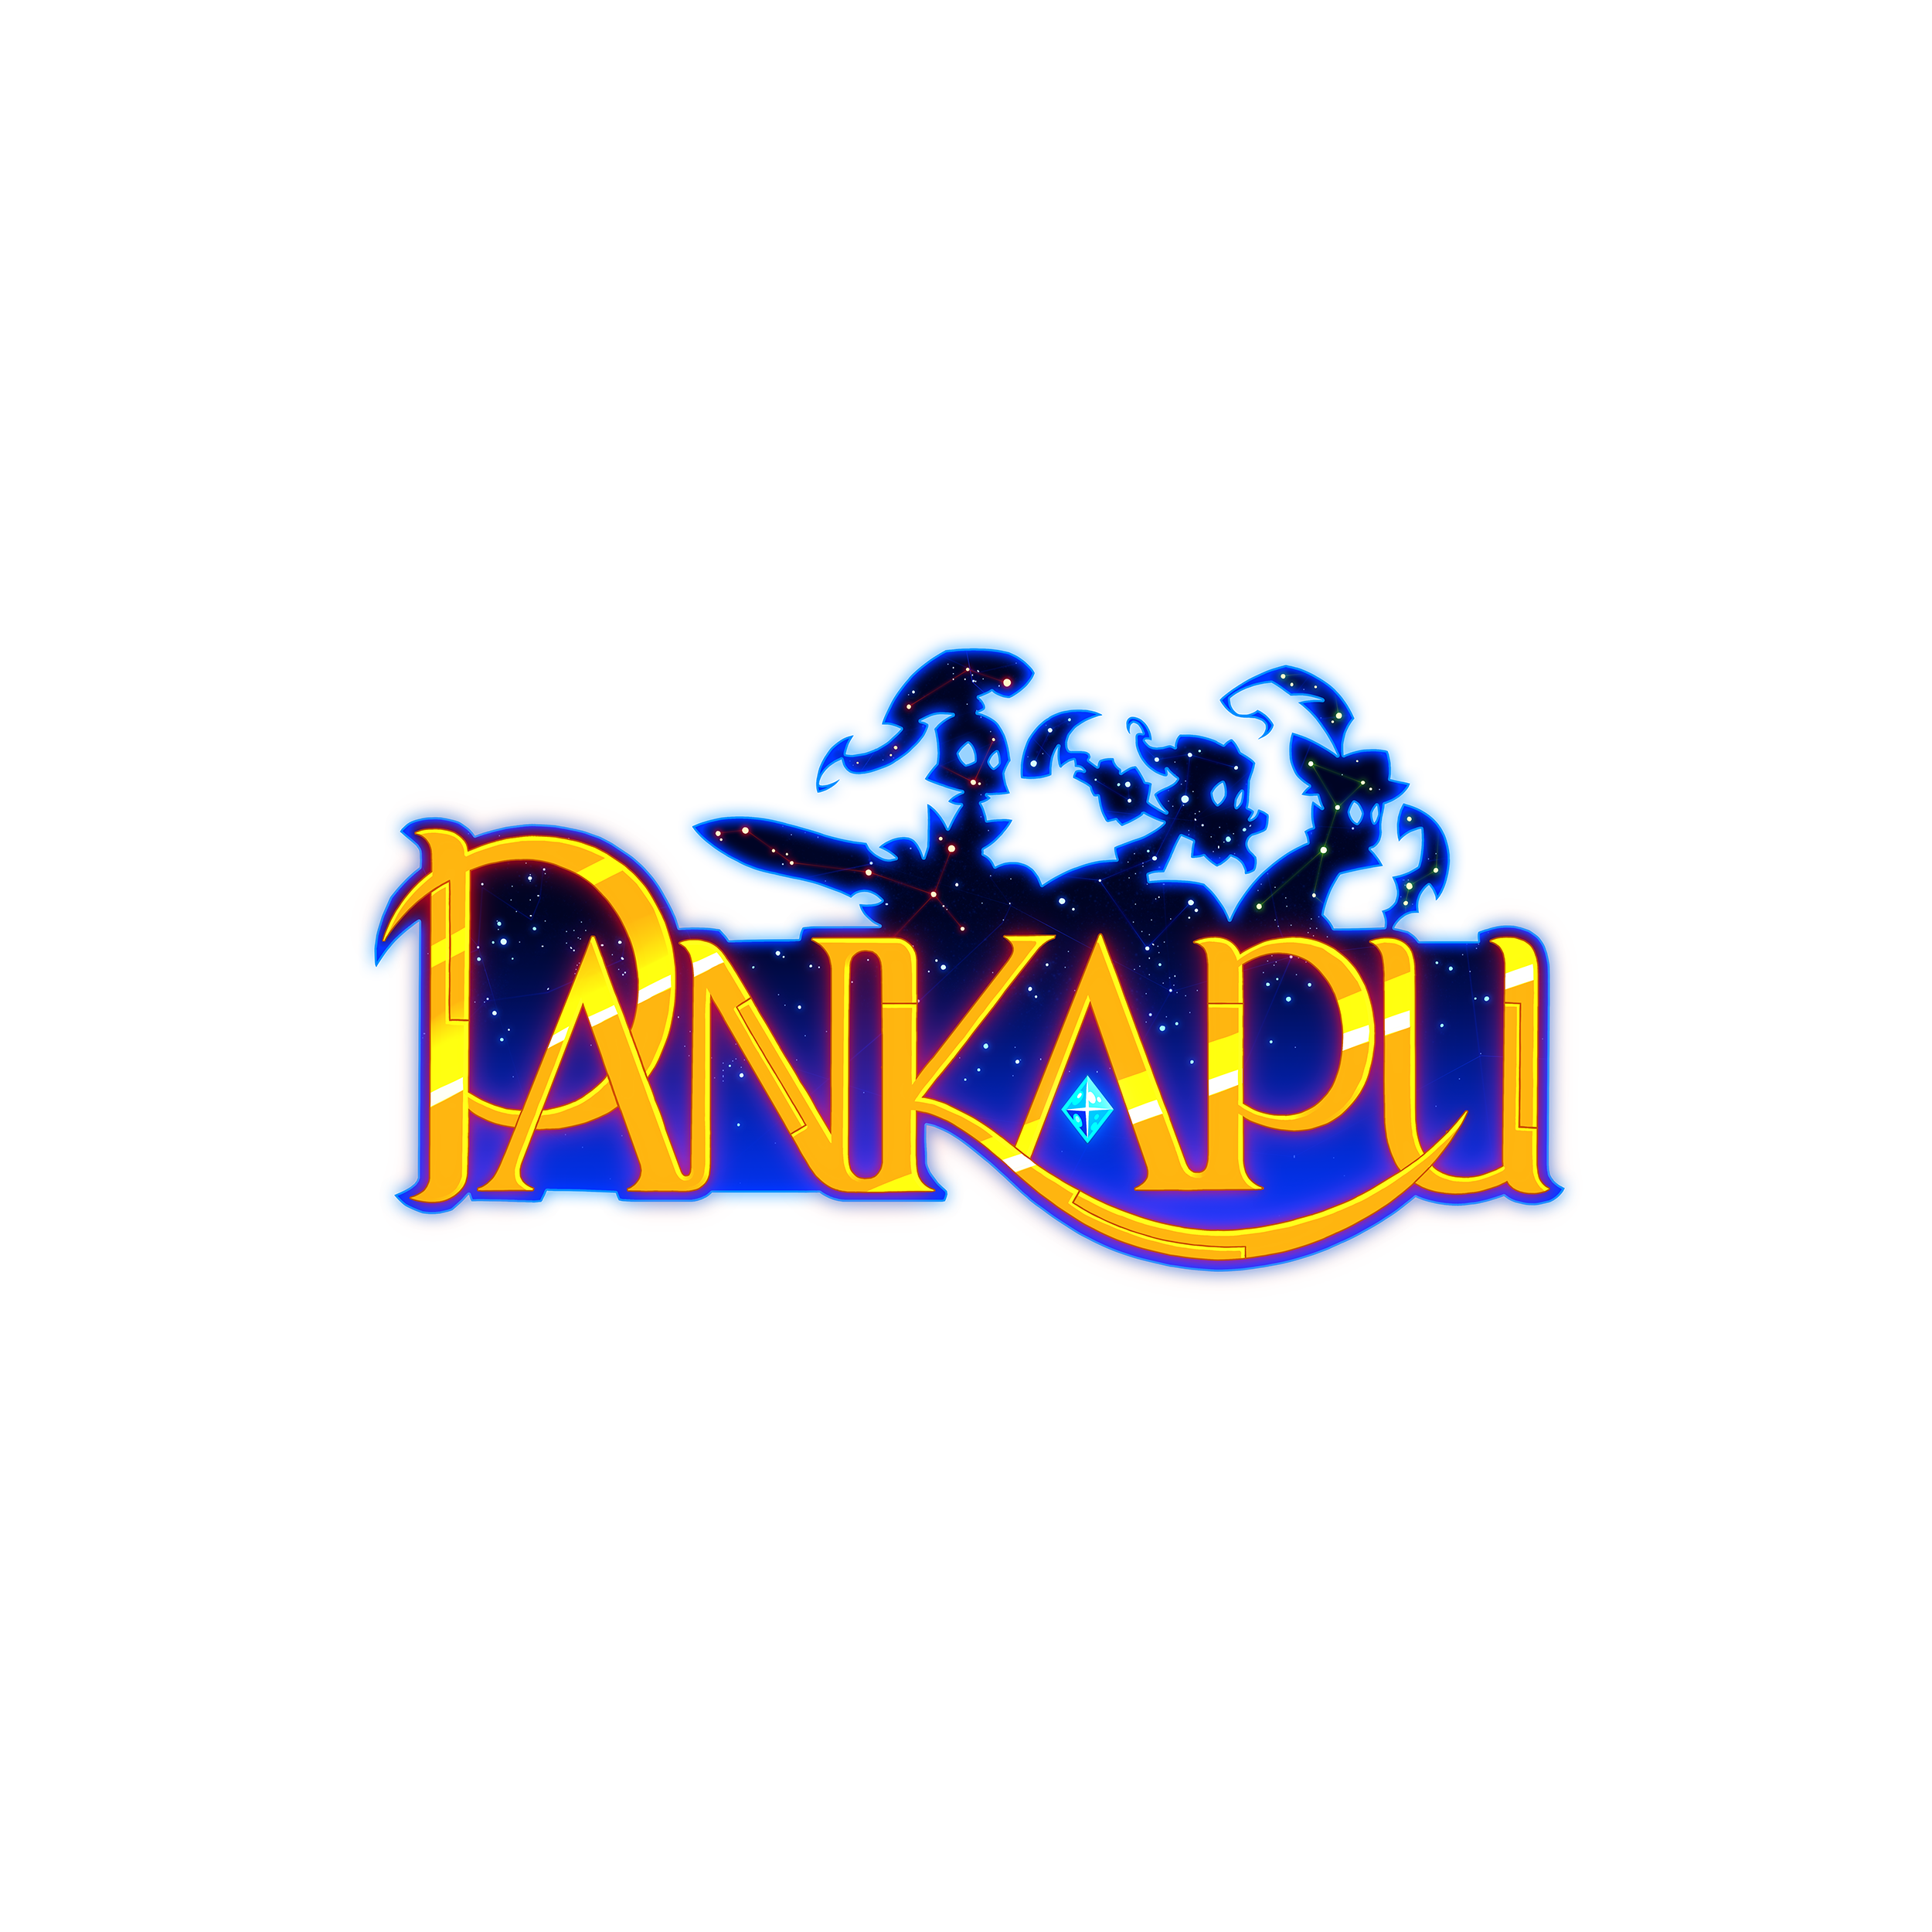 Pankapu logo